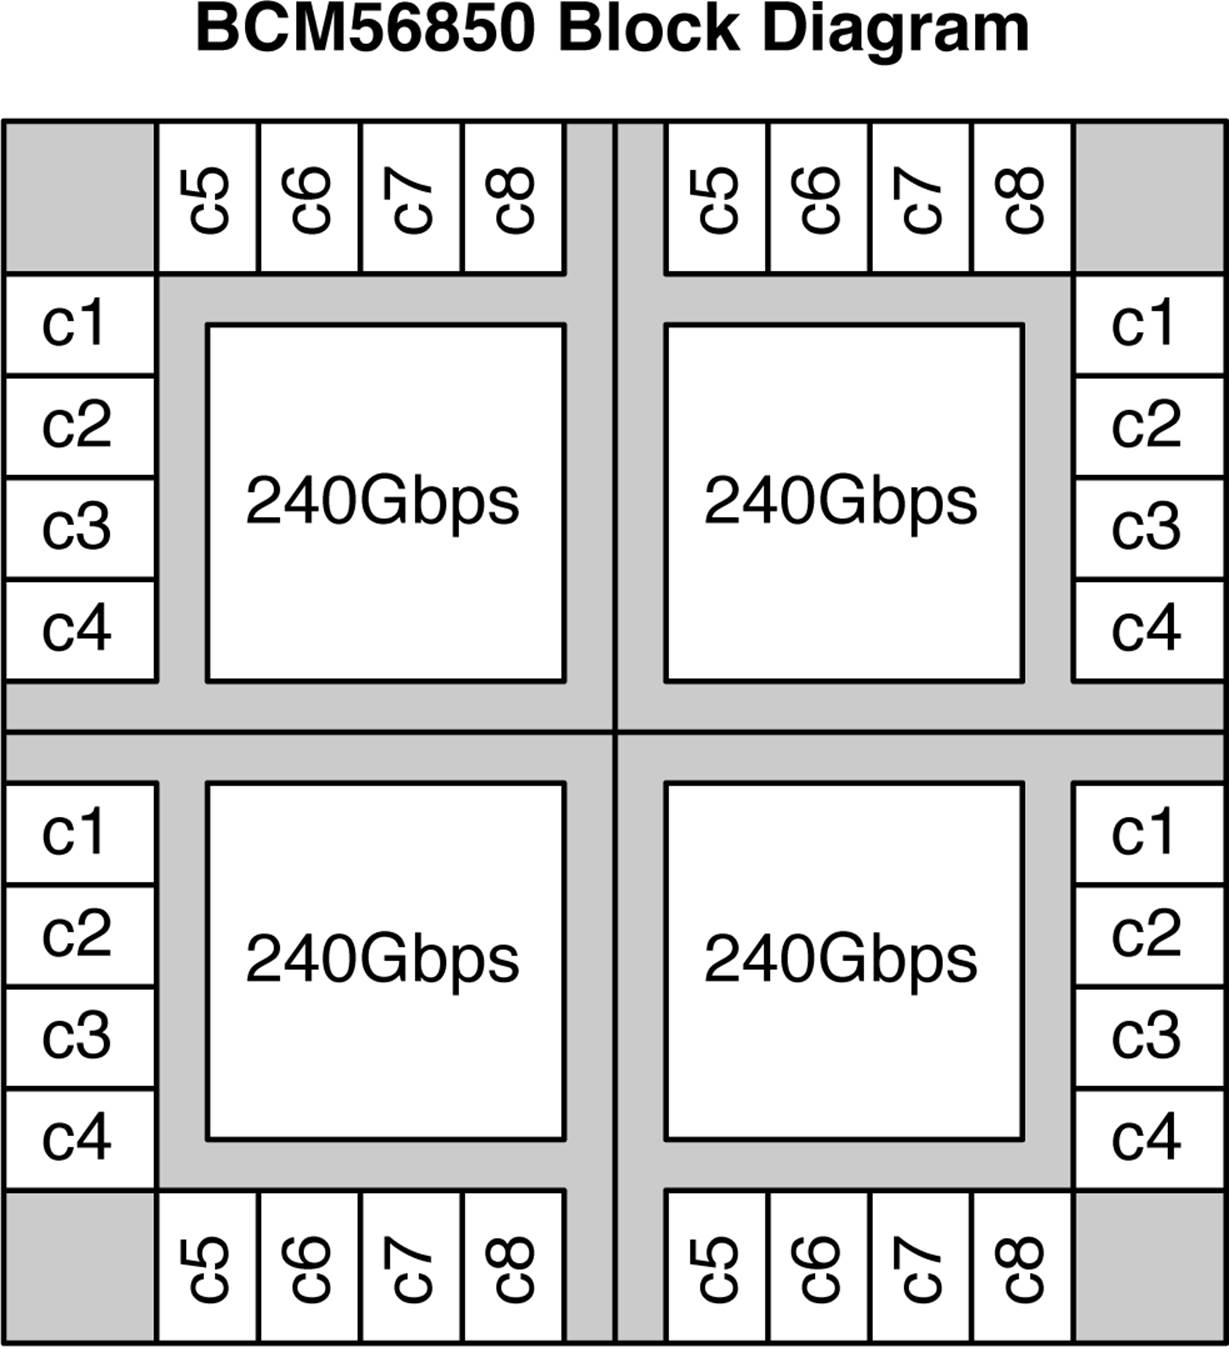 Block diagram of the BCM58850 chipset